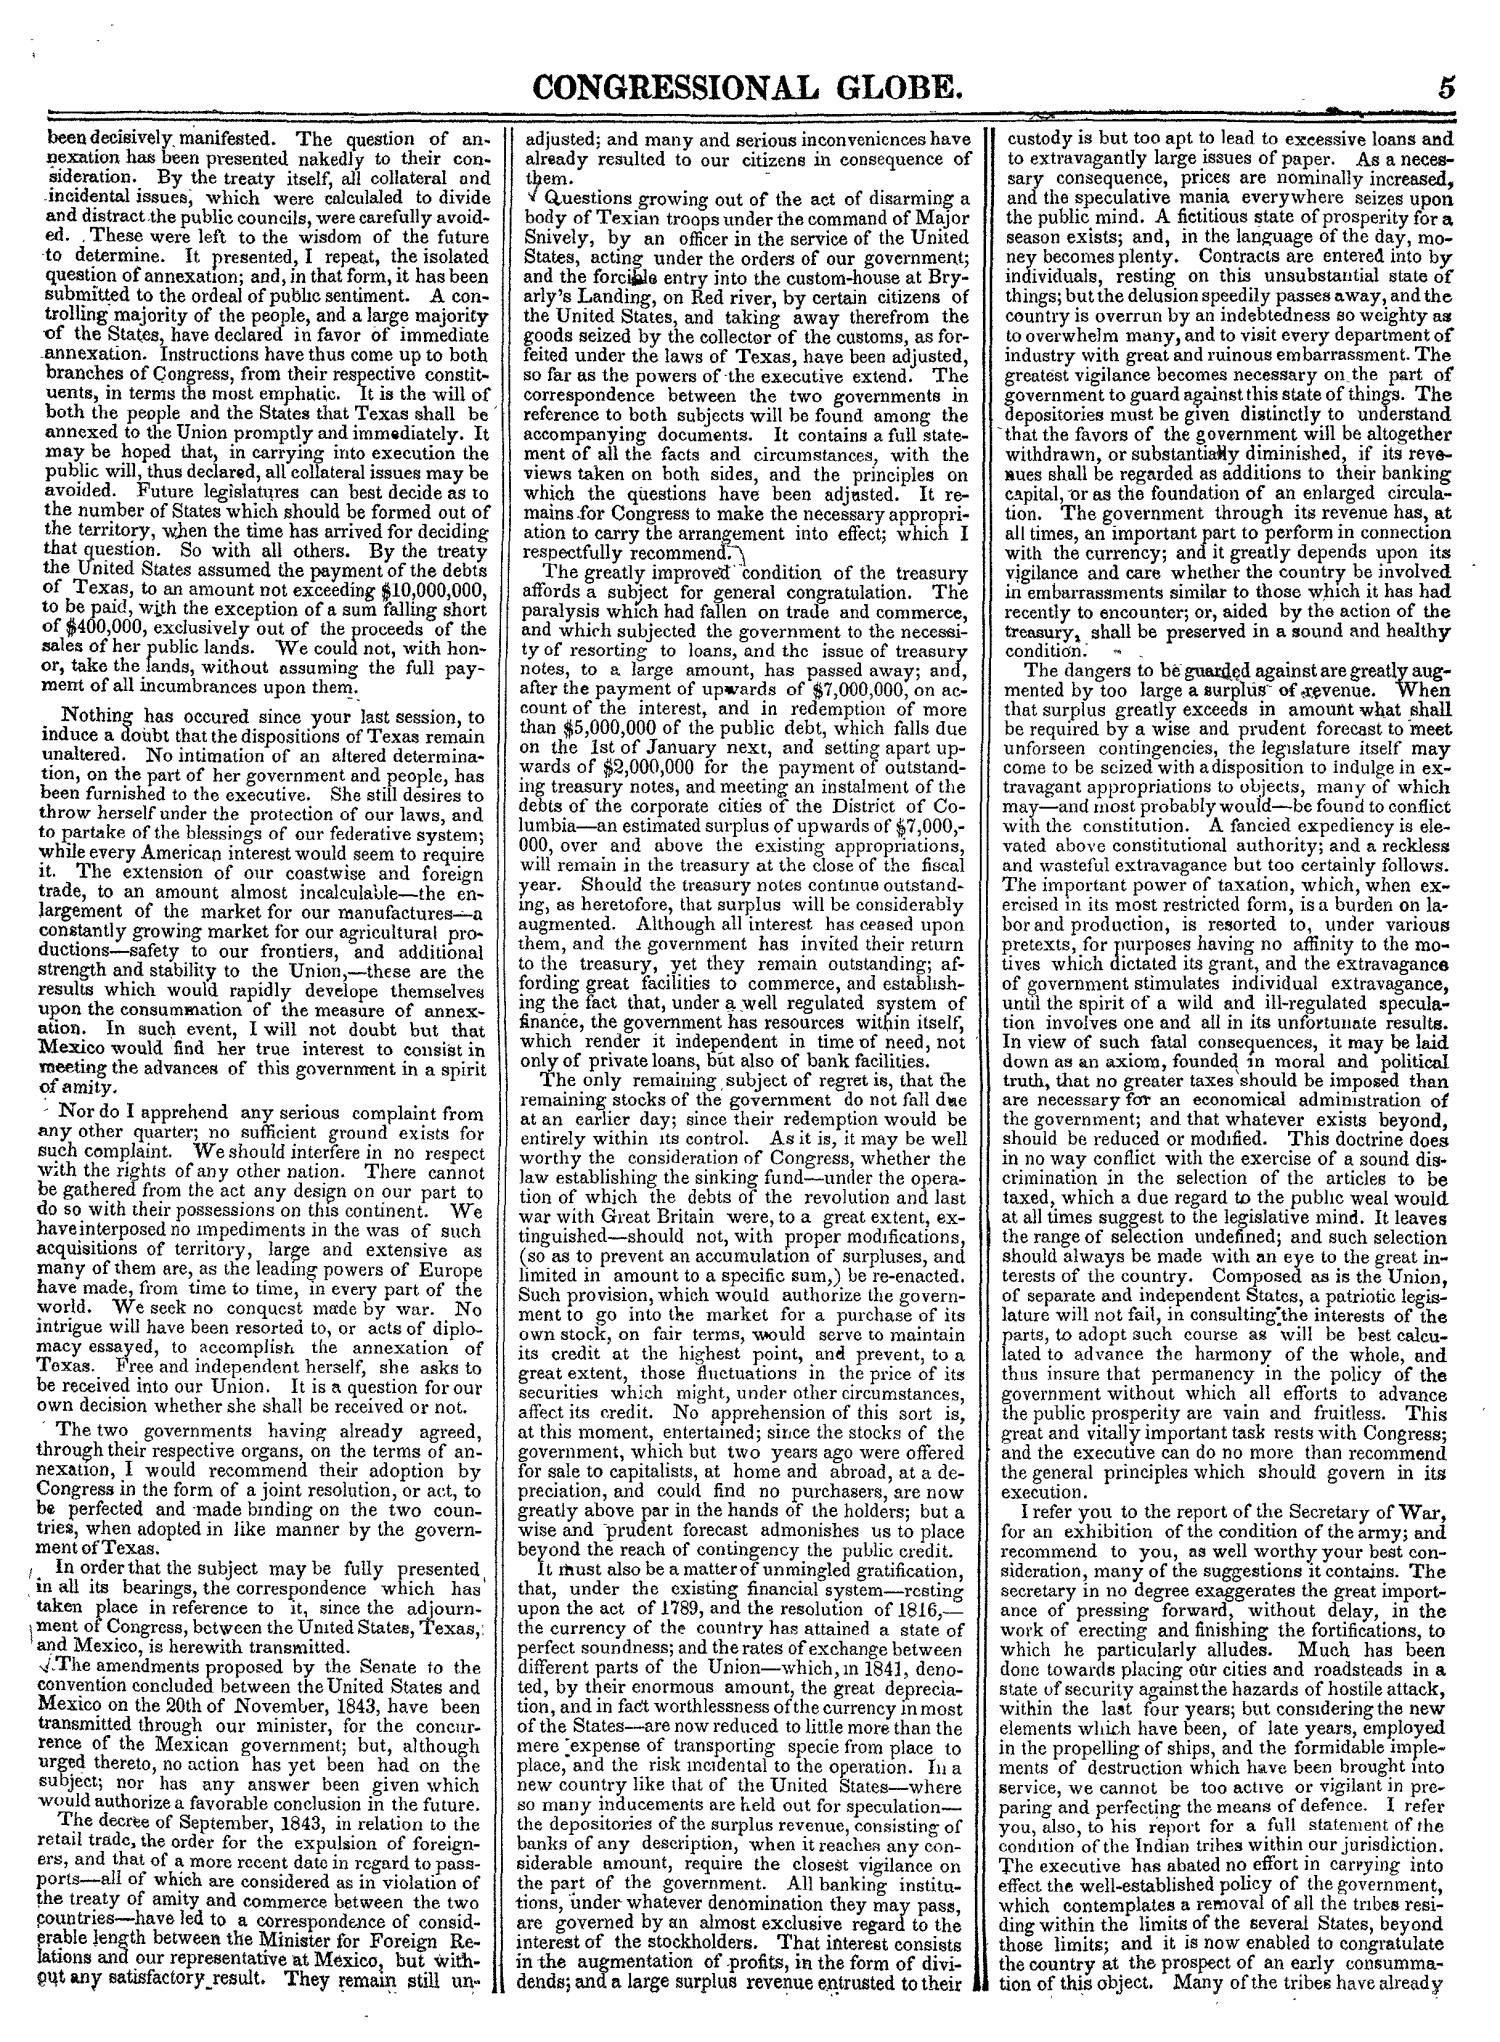 The Congressional Globe, Volume 14: Twenty-Eighth Congress, Second Session
                                                
                                                    5
                                                